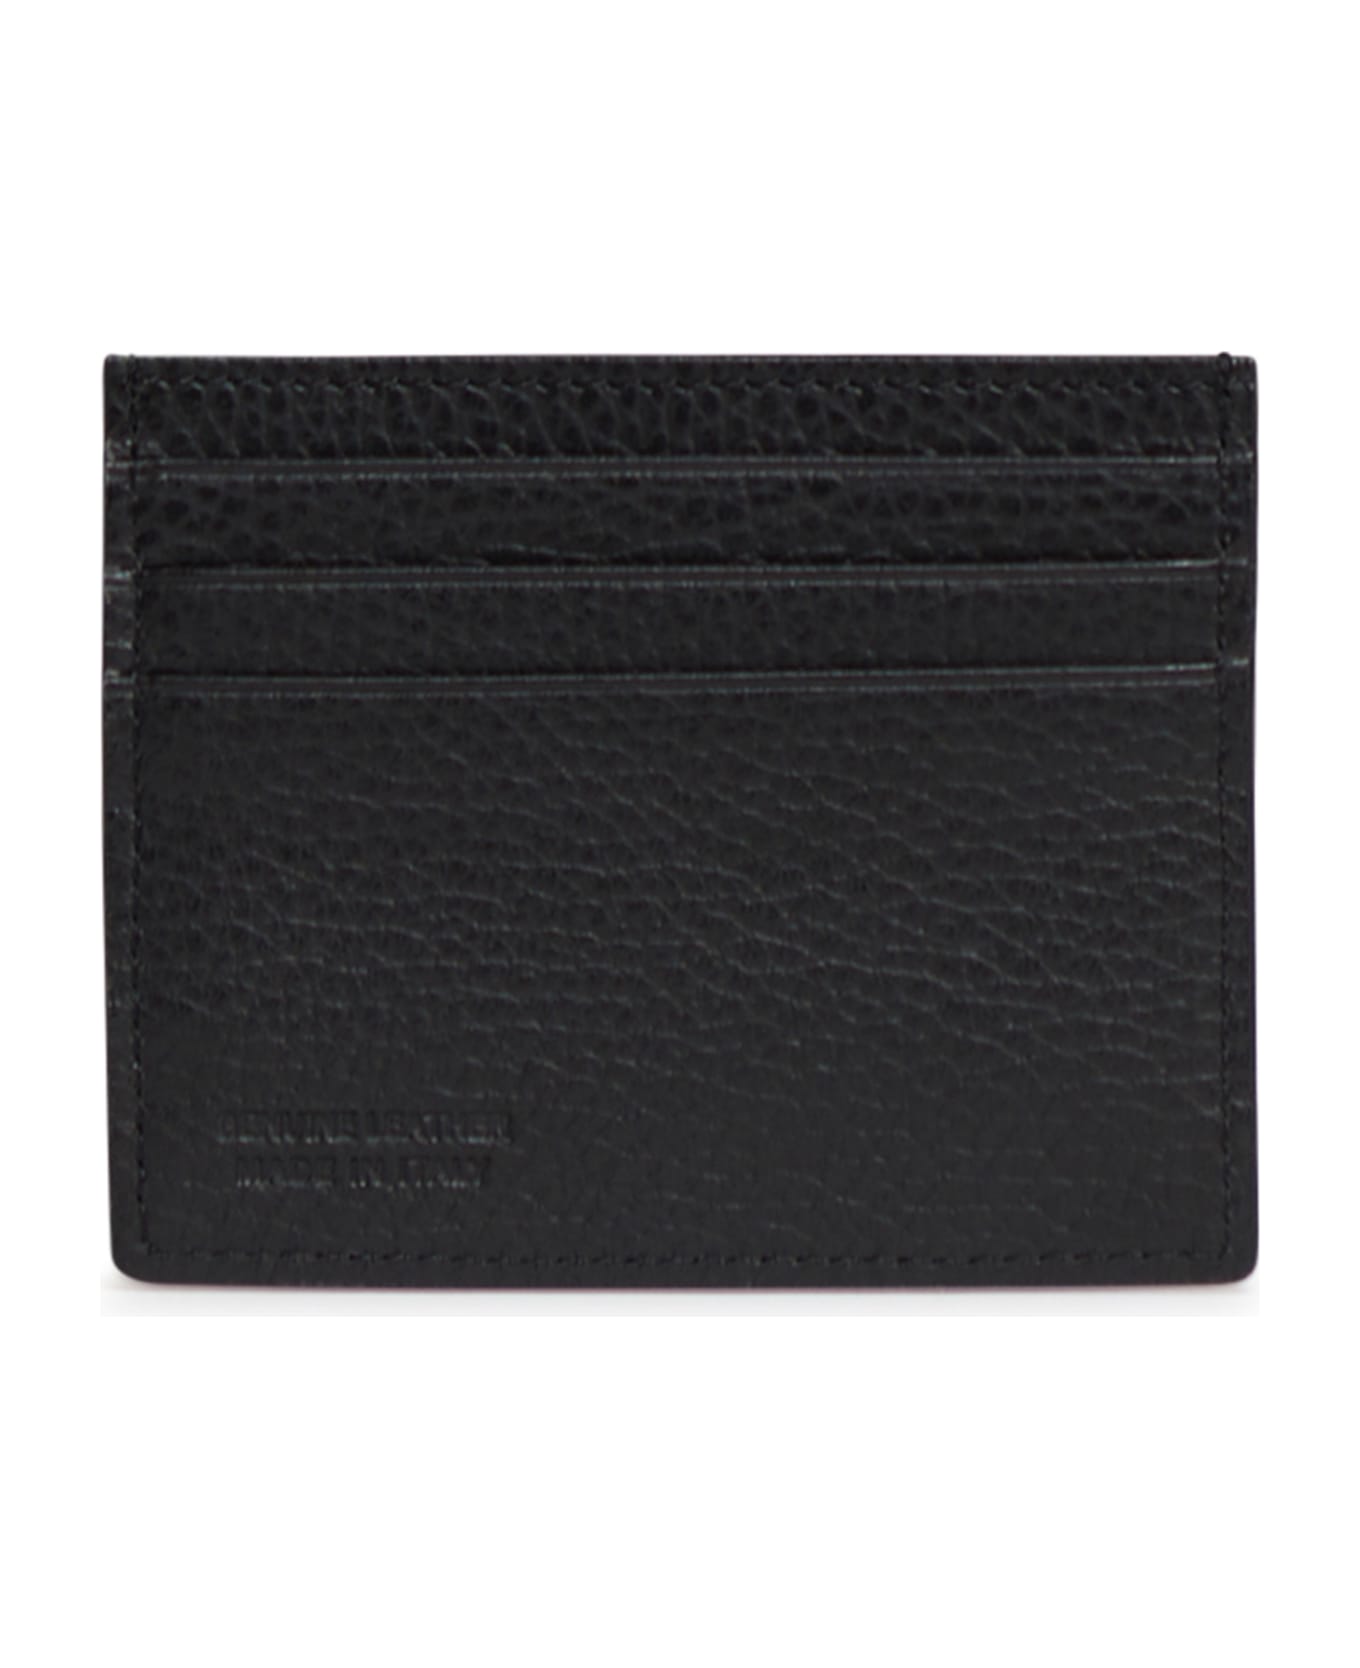 Kiton Credit Card Case - Black